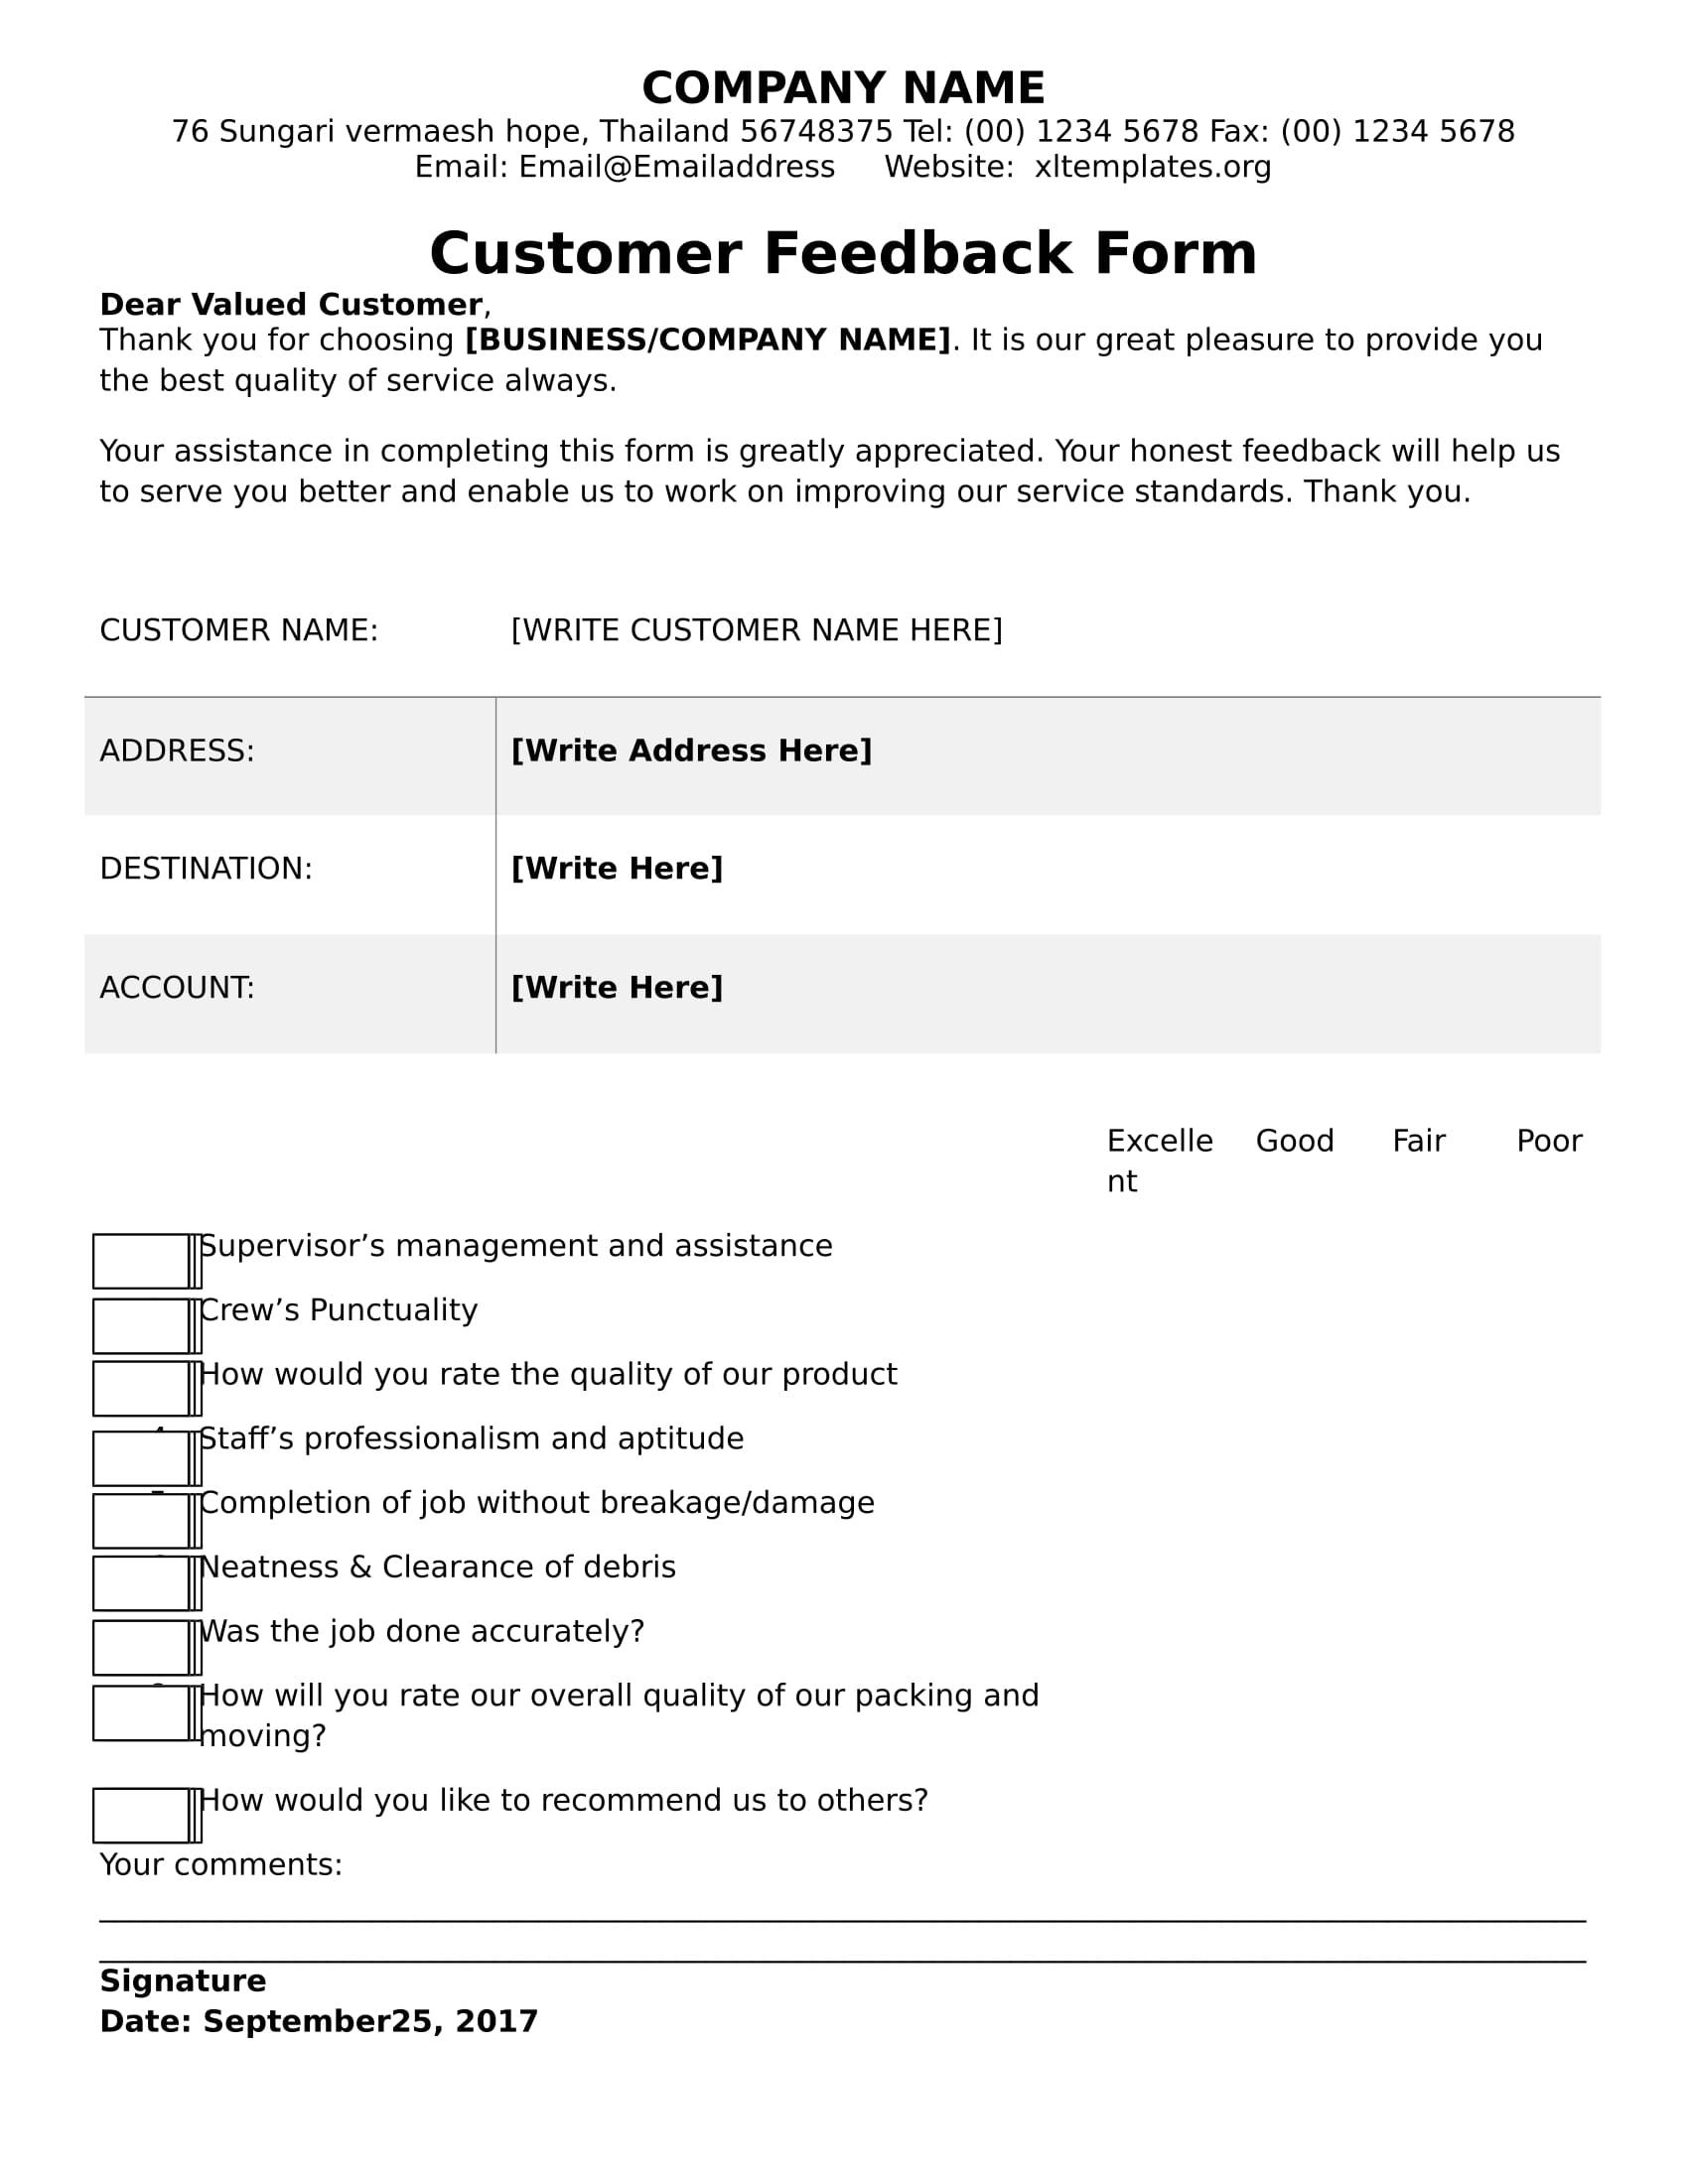 customer feedback review form 1